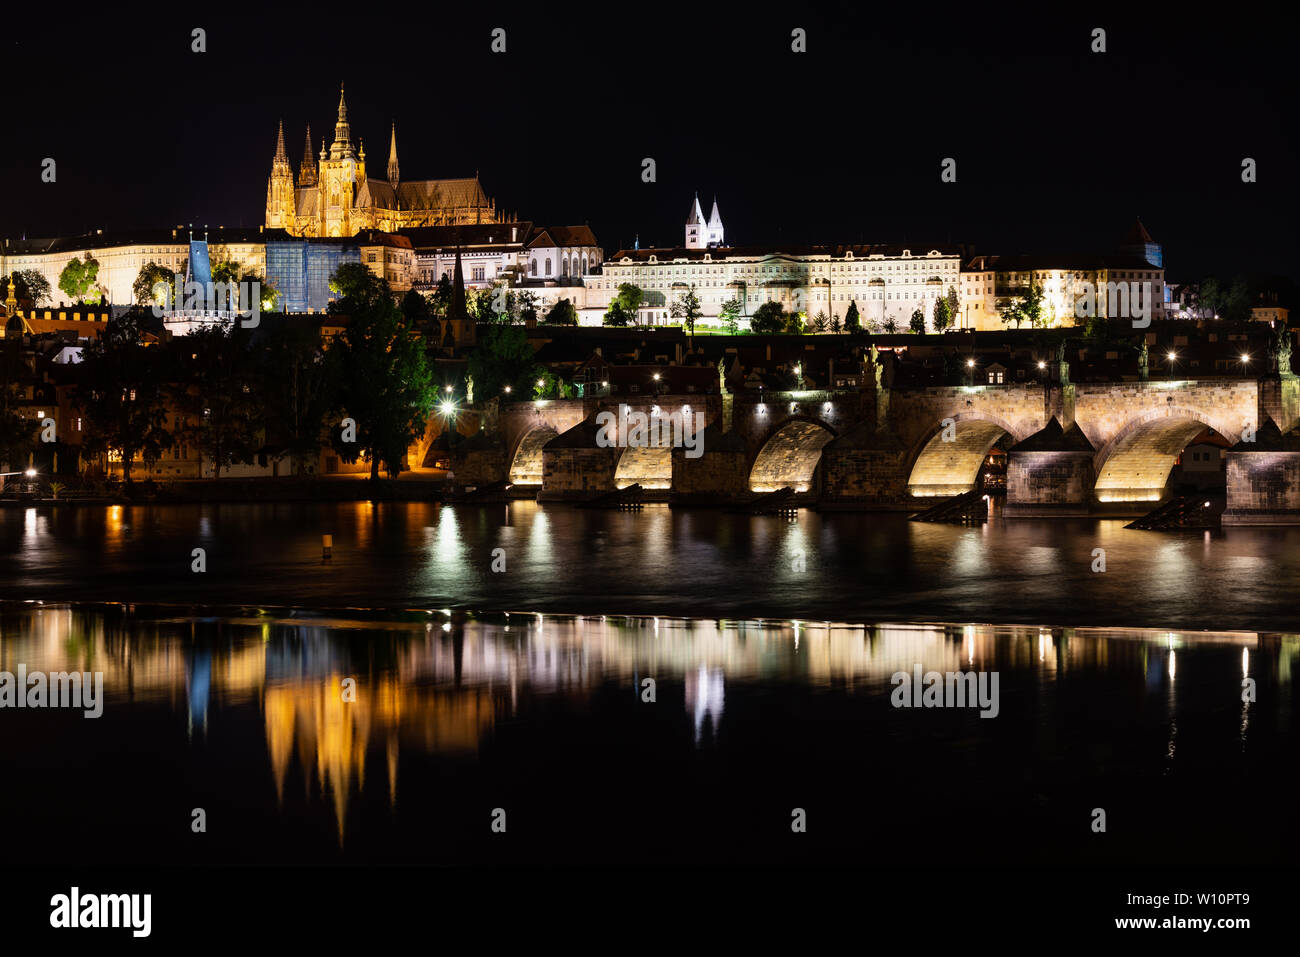 Charles bridge, famous landmark and travel destination at night in Prague, Czech Republic Stock Photo